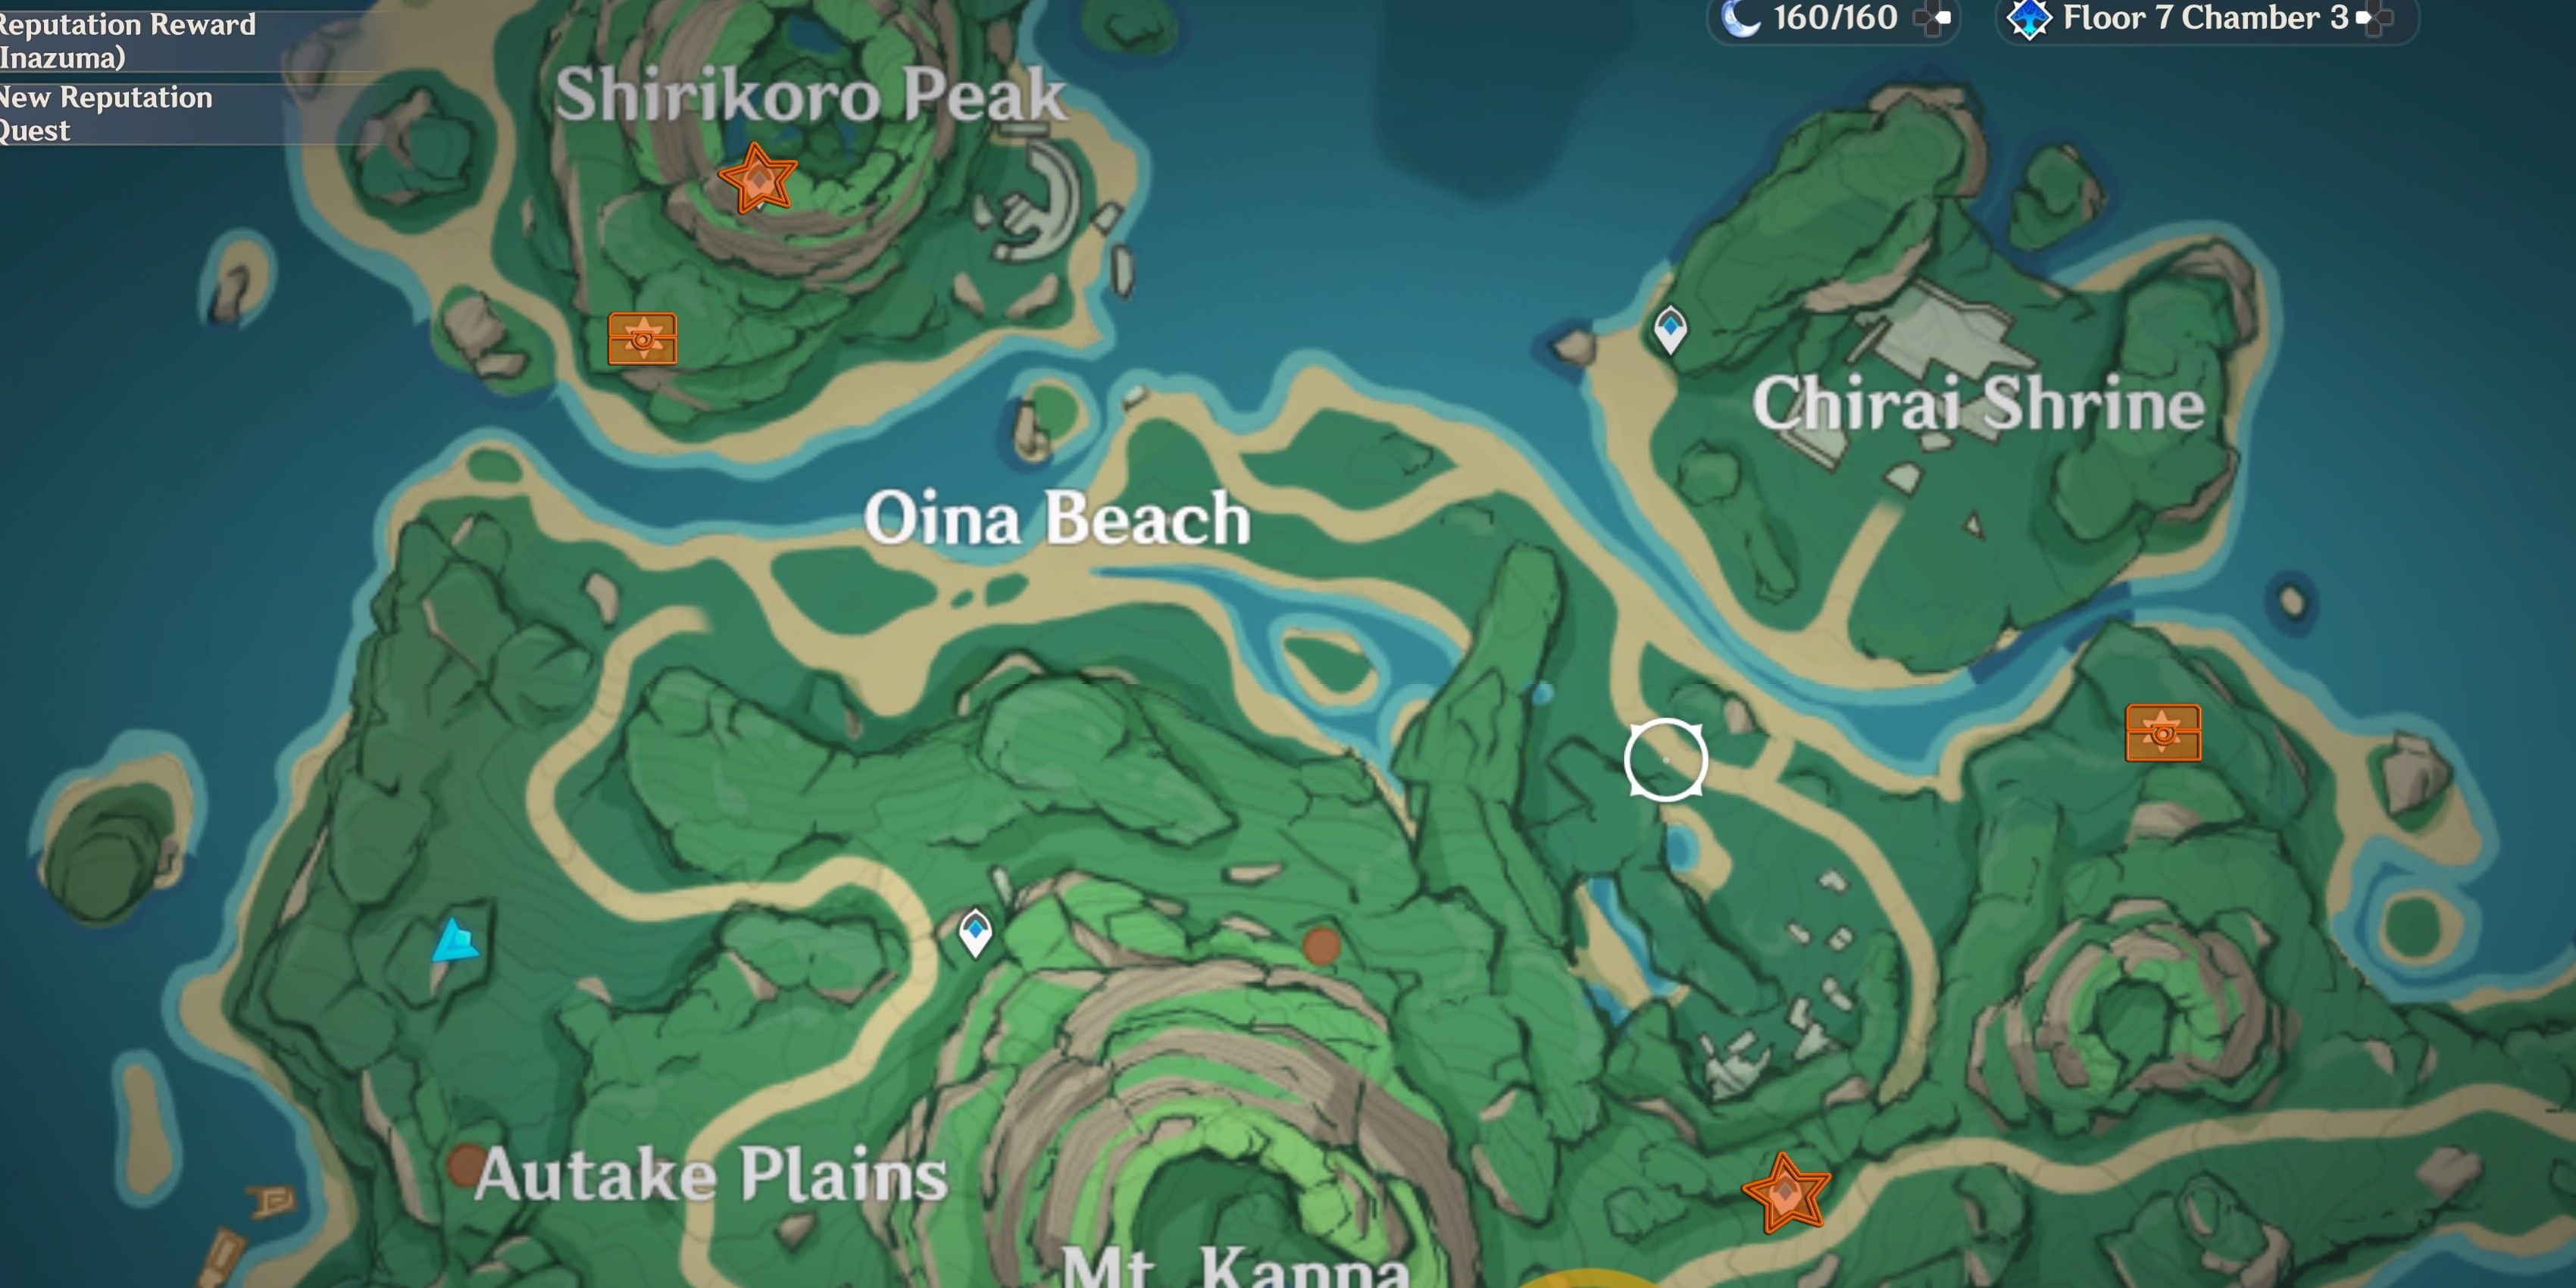 Genshin Impact Shrine of Depth Tsurumi Island, the map shows highlighted areas